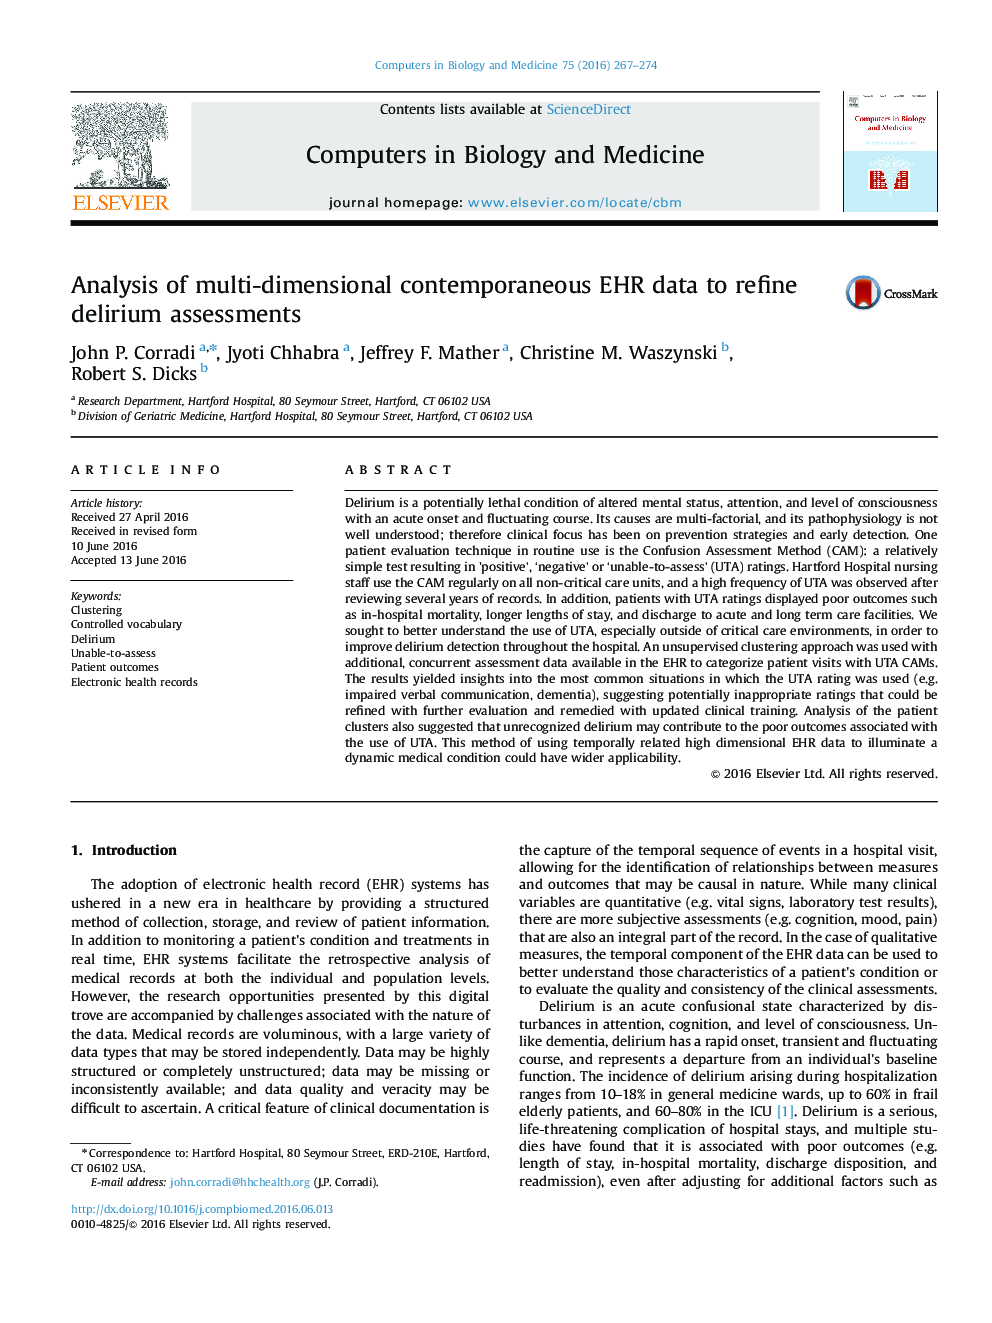 Analysis of multi-dimensional contemporaneous EHR data to refine delirium assessments